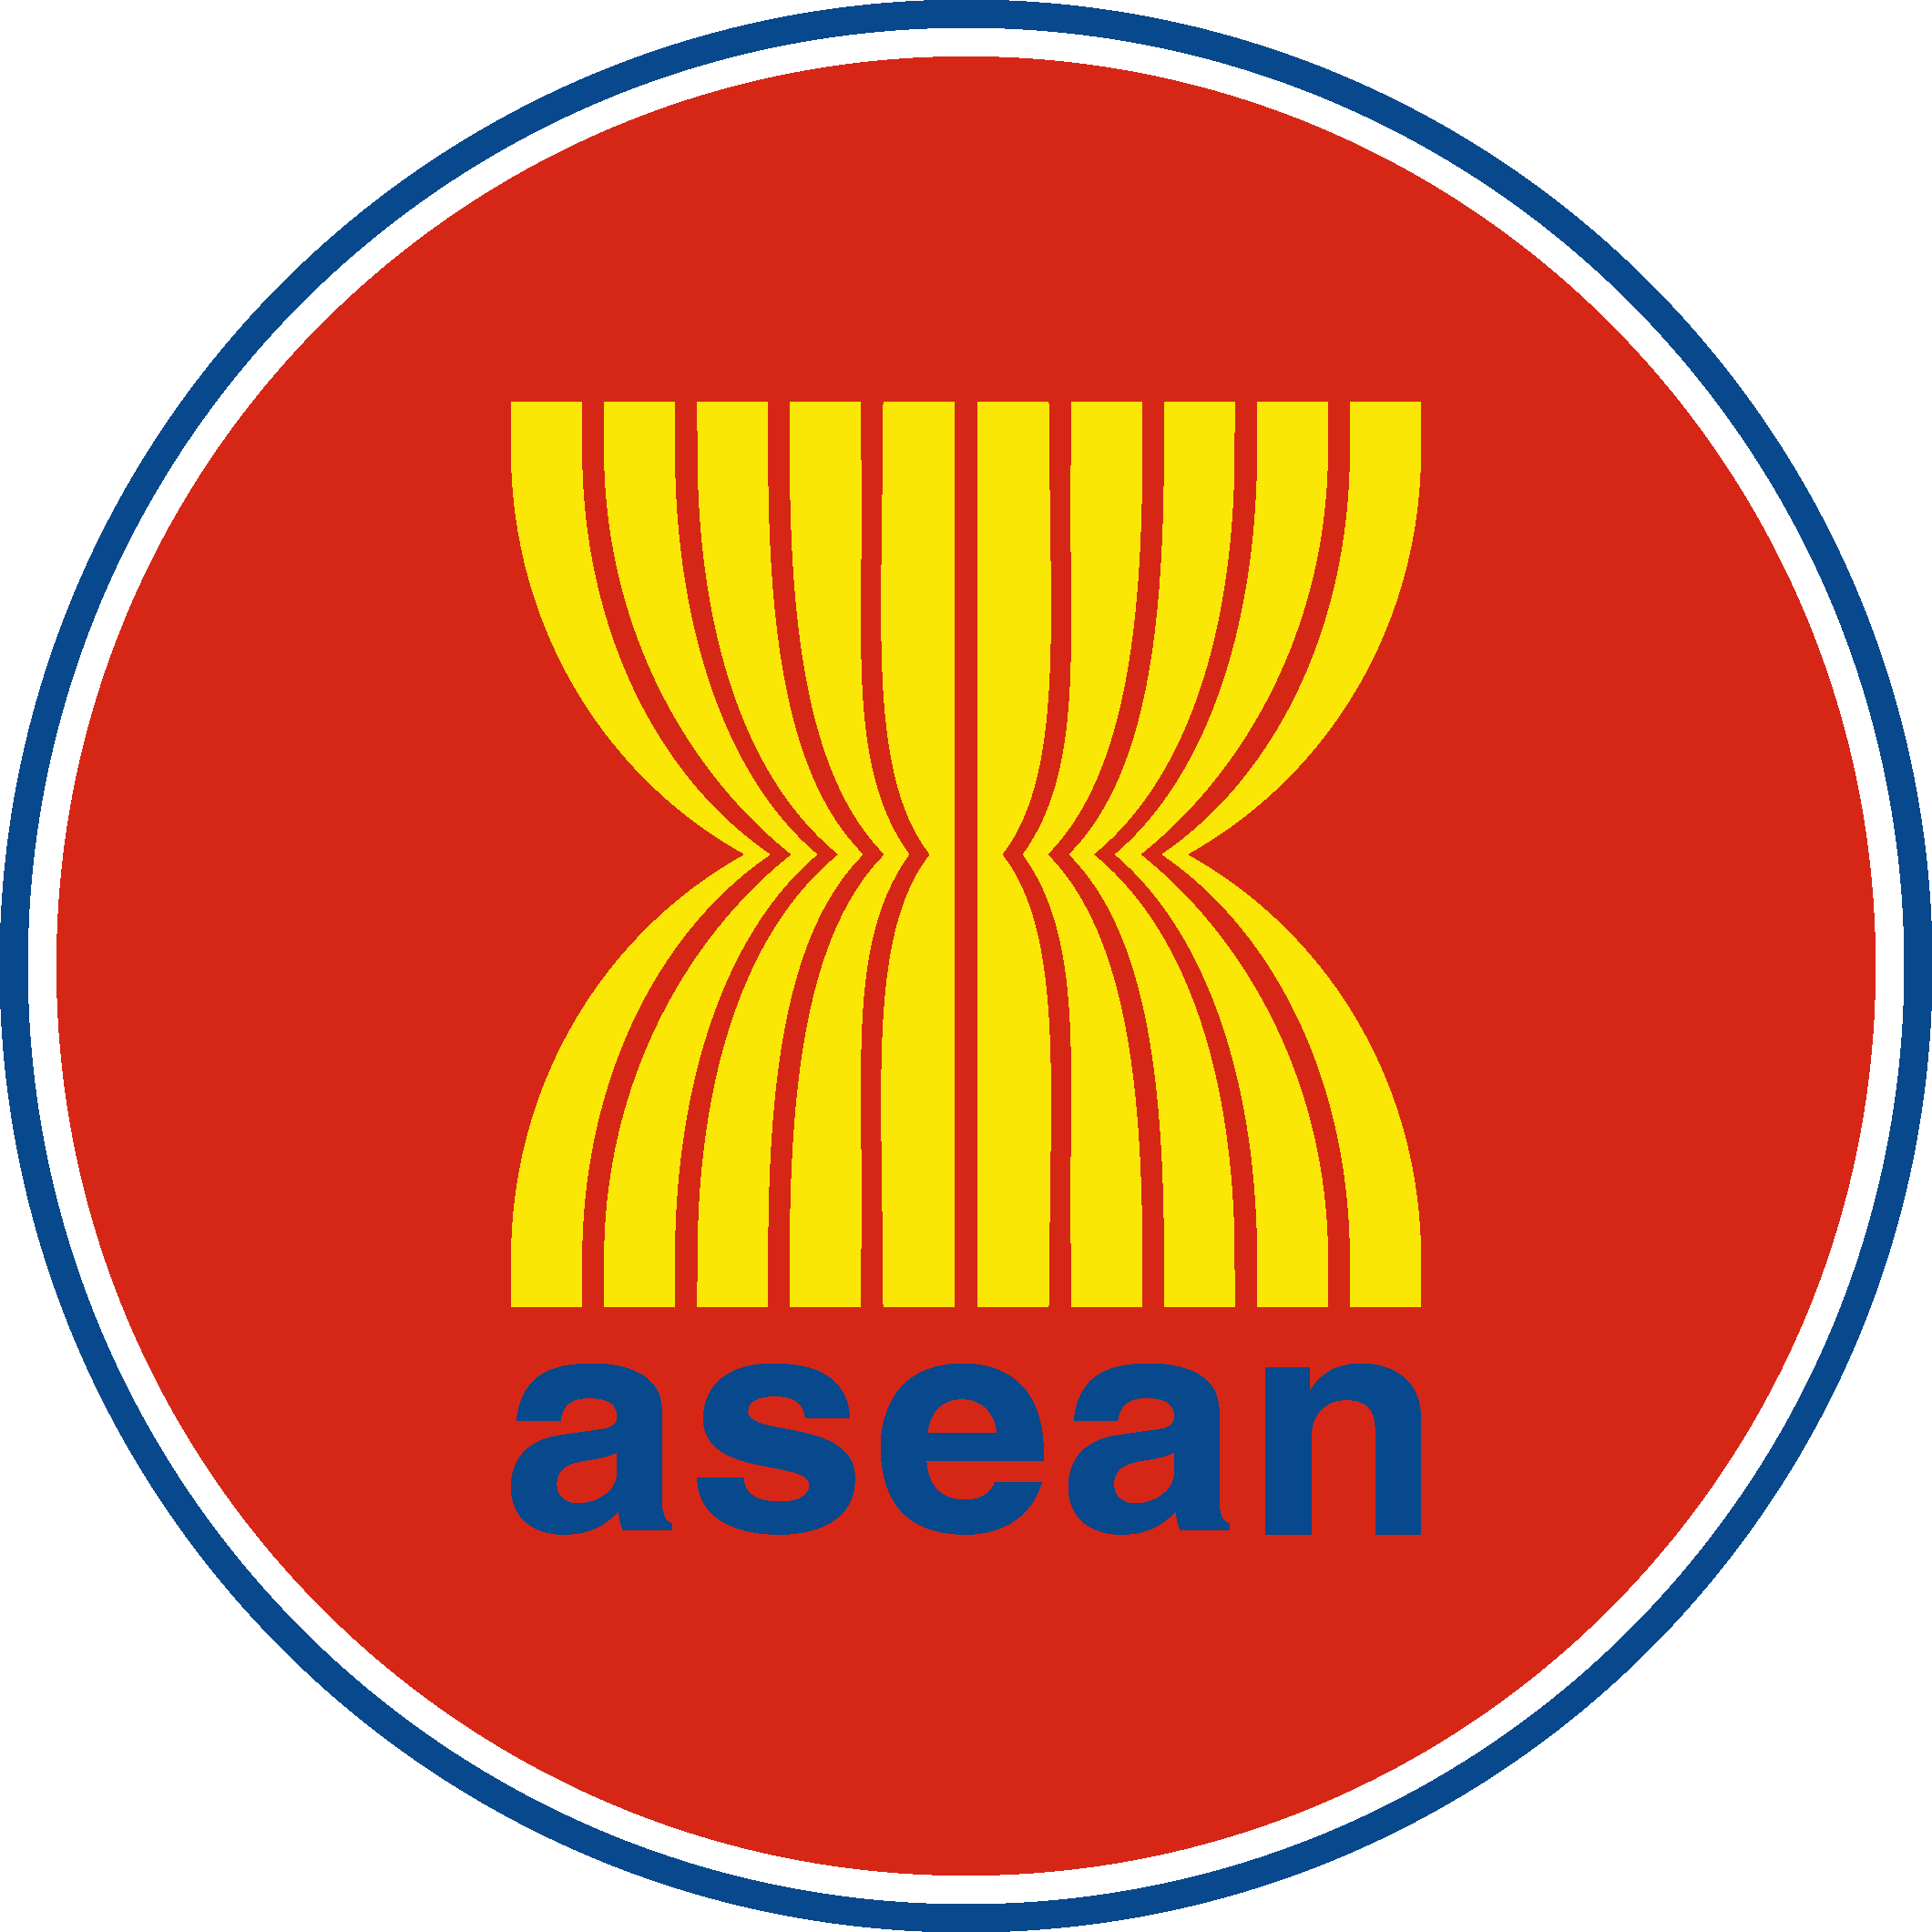 ASEAN Logo - Association of Southeast Asian Nations